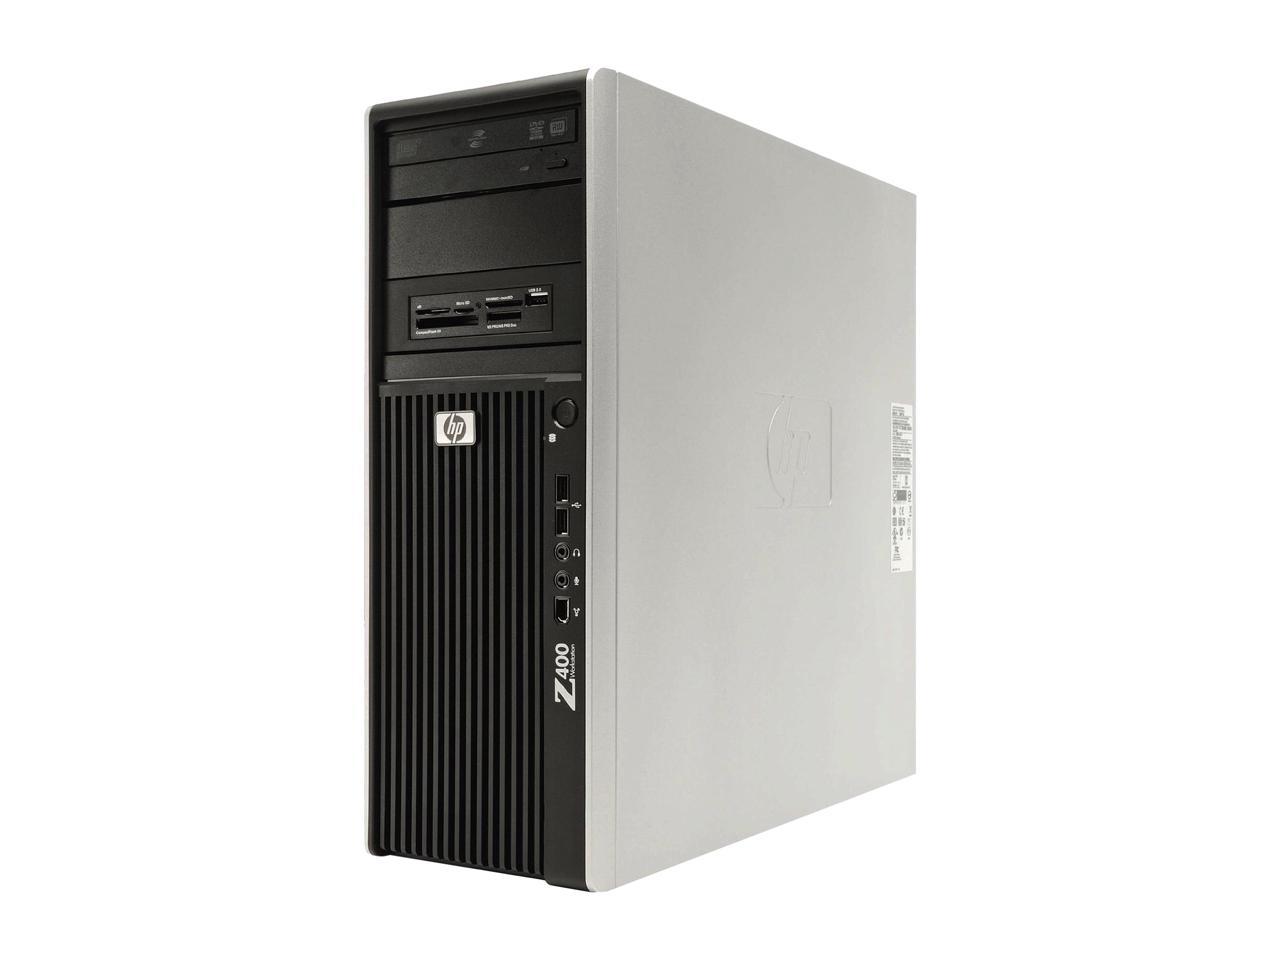 HP Desktop Computer Z400 Xeon W3520 (2.66 GHz) 4 GB DDR3 250 GB HDD ATI Radeon HD 3450 Windows 10 Pro Multi-Language, English / Spanish